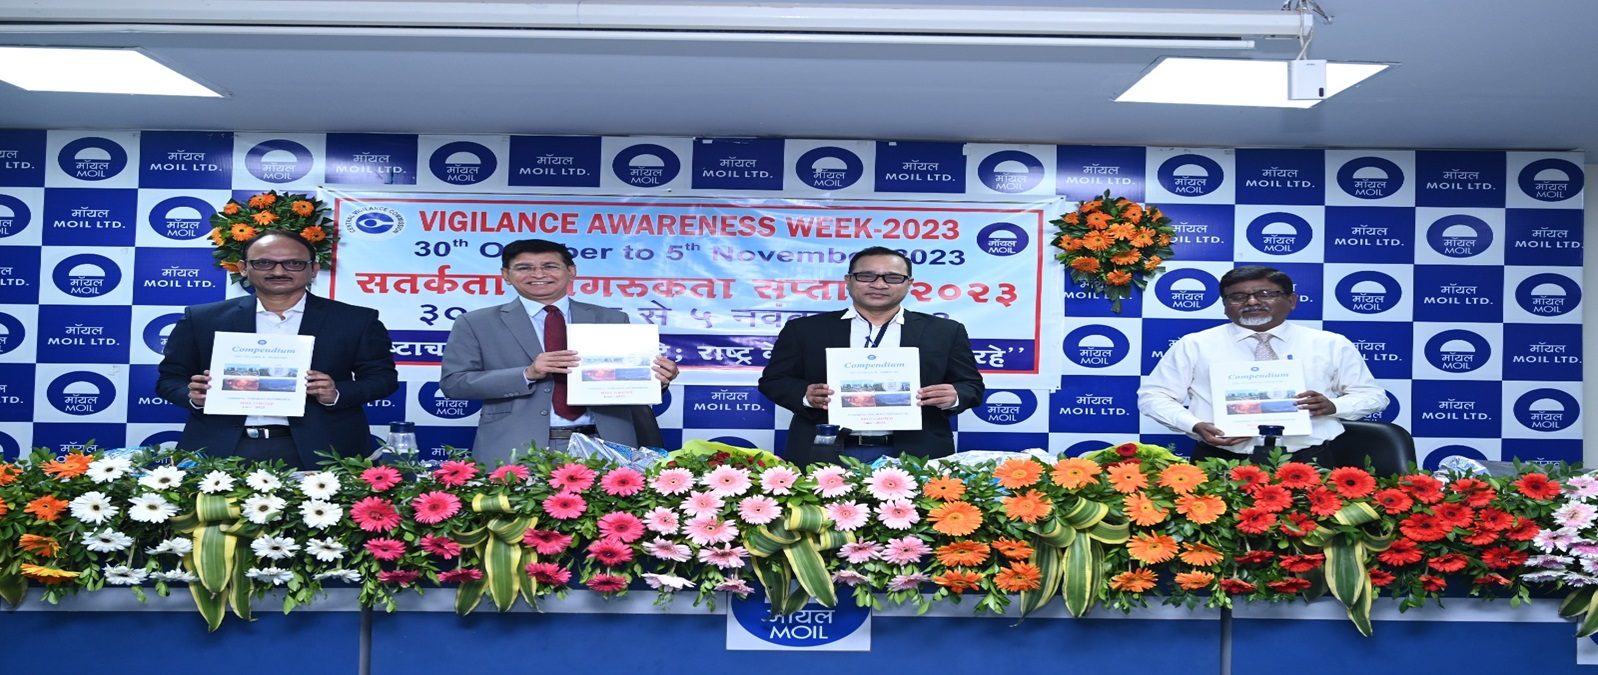 Inauguration of Vigilance Awareness Week 2023